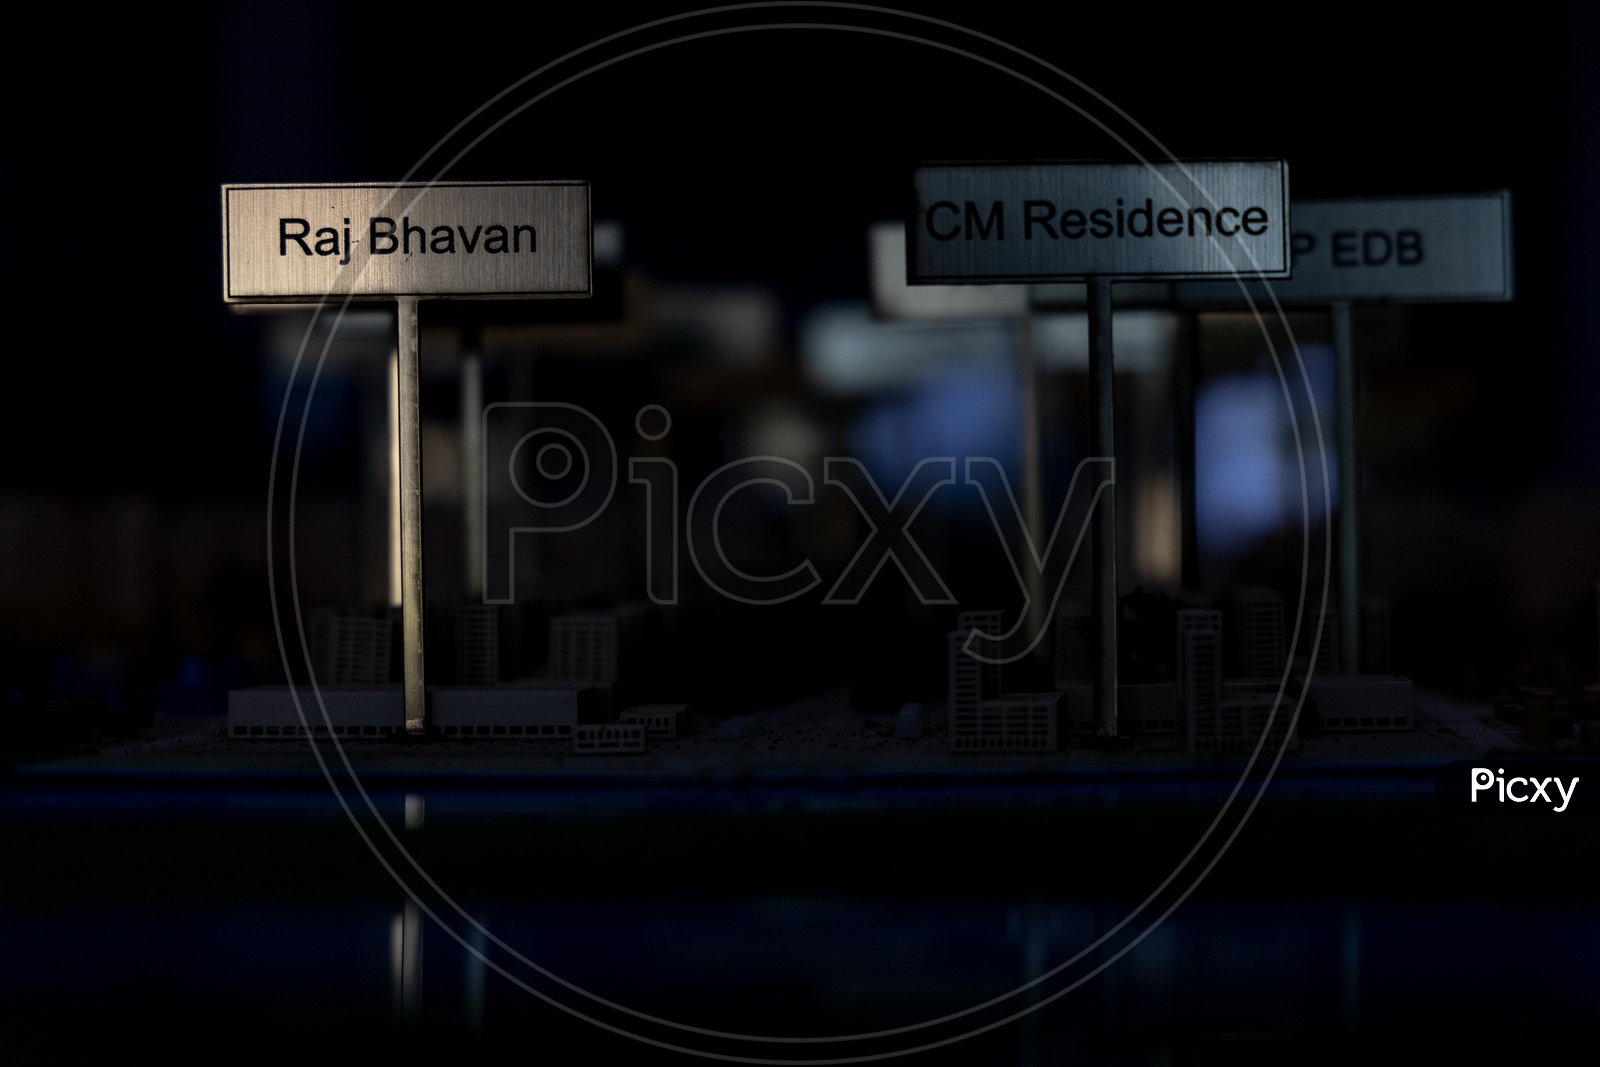 Raj Bhavan and CM Residence Miniature Models